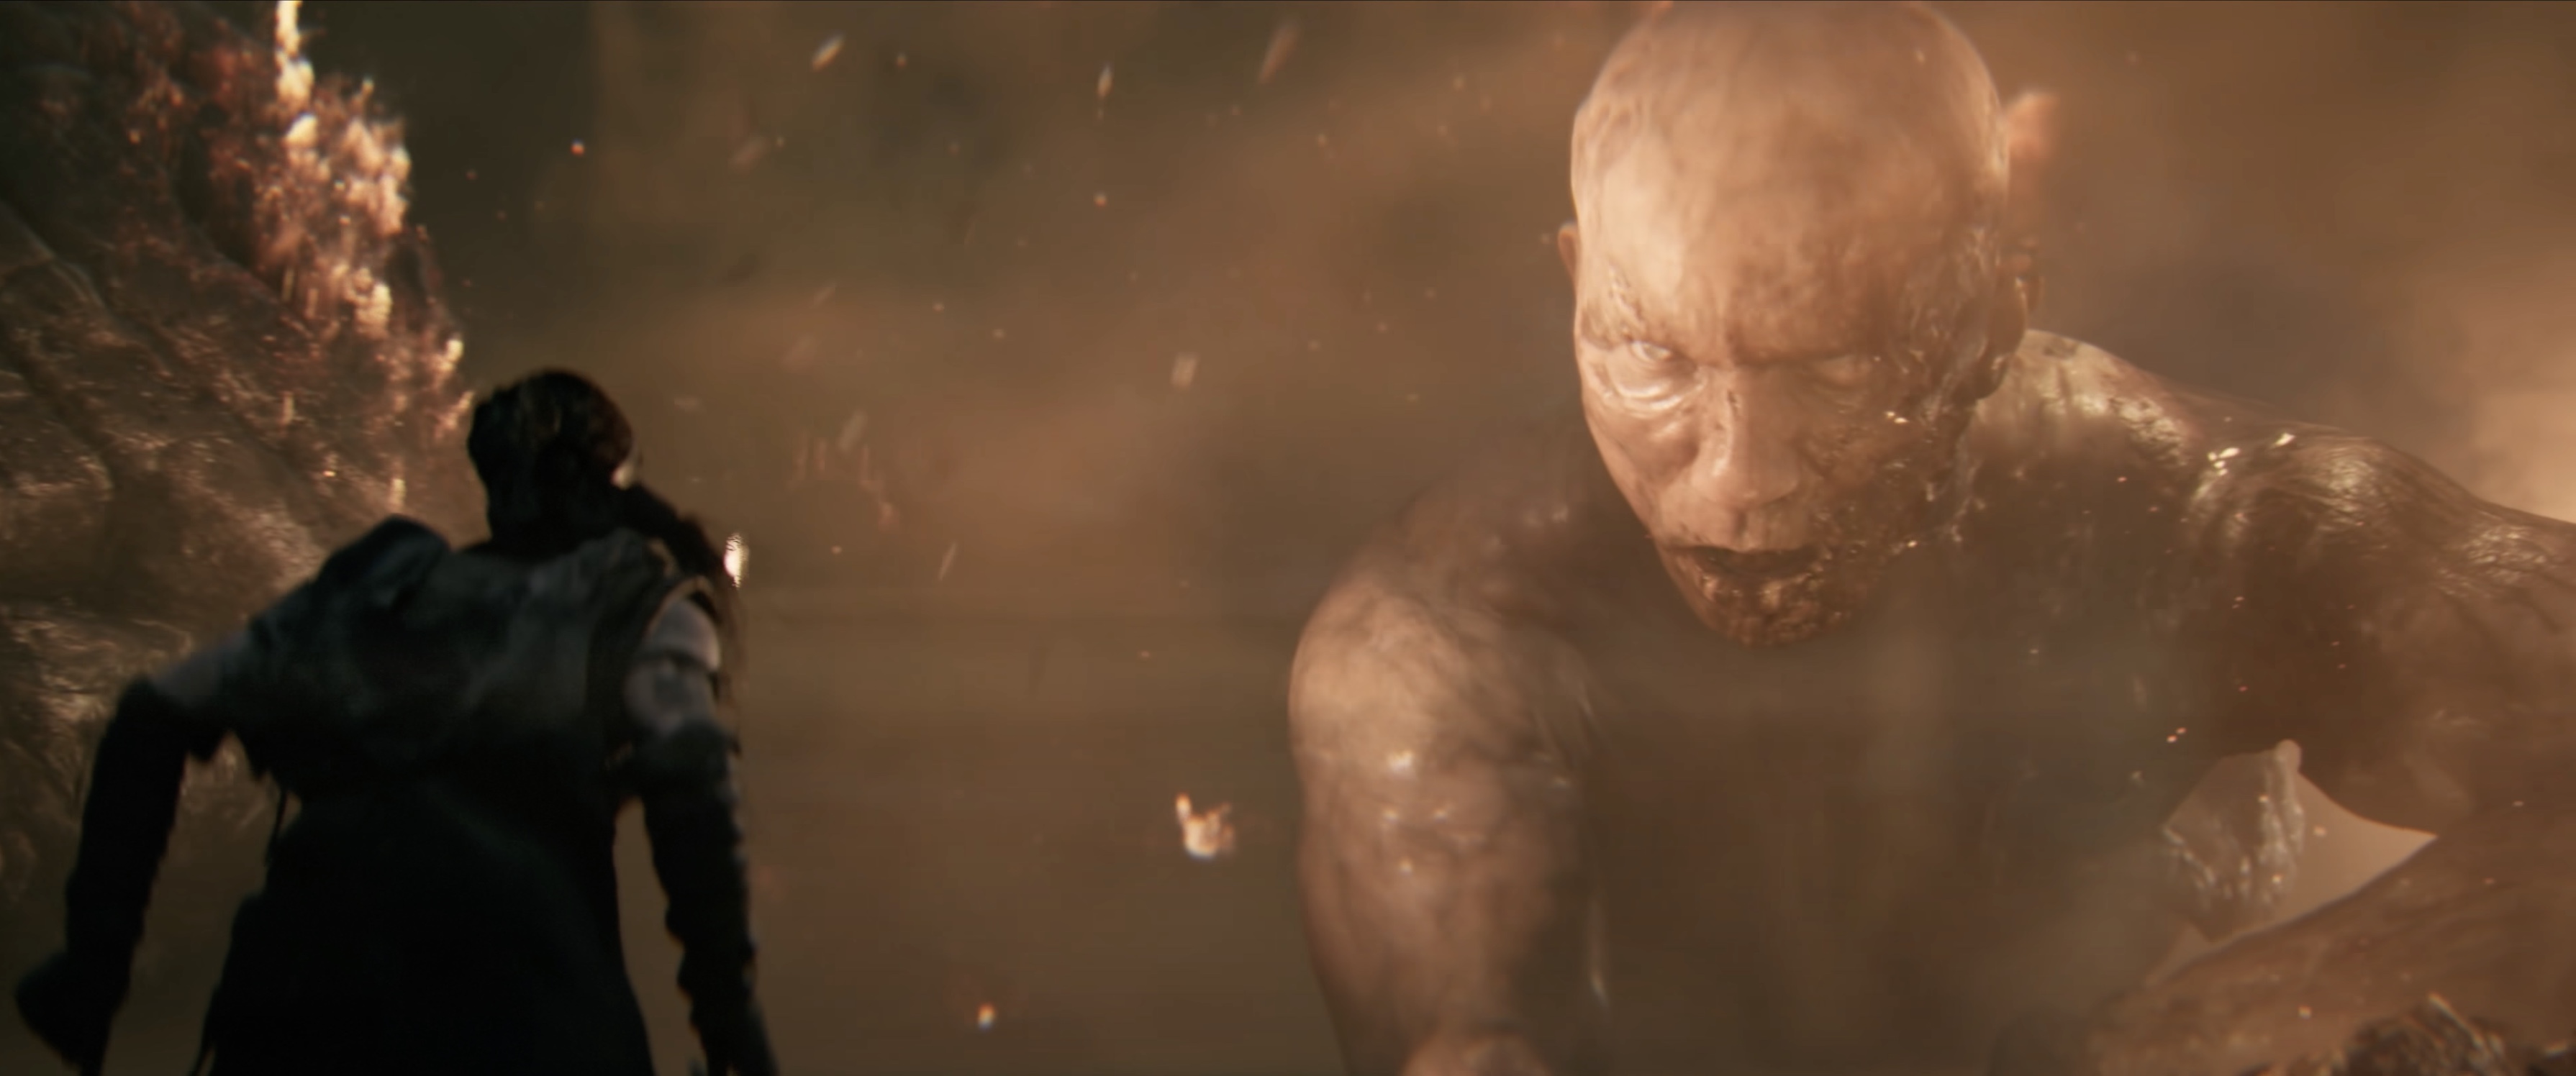 Hellblade 2 will make Hellblade look like an indie game, says game director